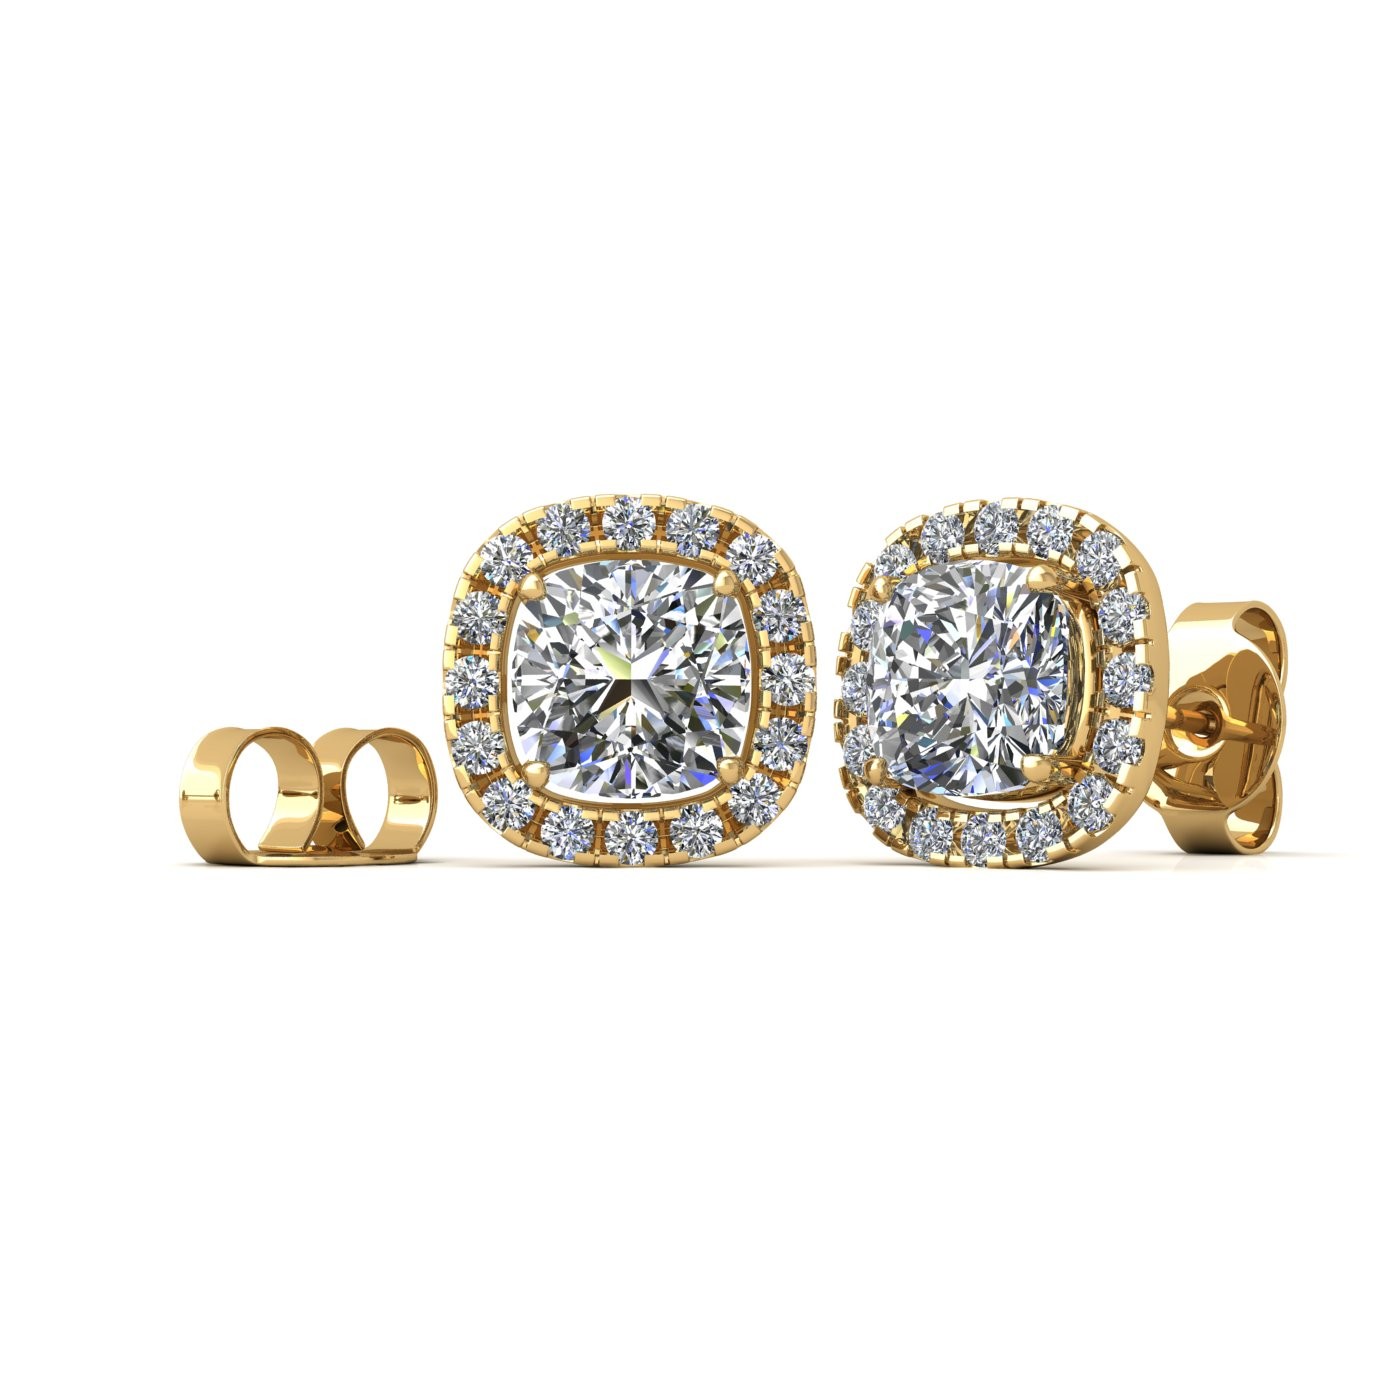 18k yellow gold 0,3 ct each (0,6 tcw) 4 prongs cushion shape diamond earrings with diamond pavÉ set halo